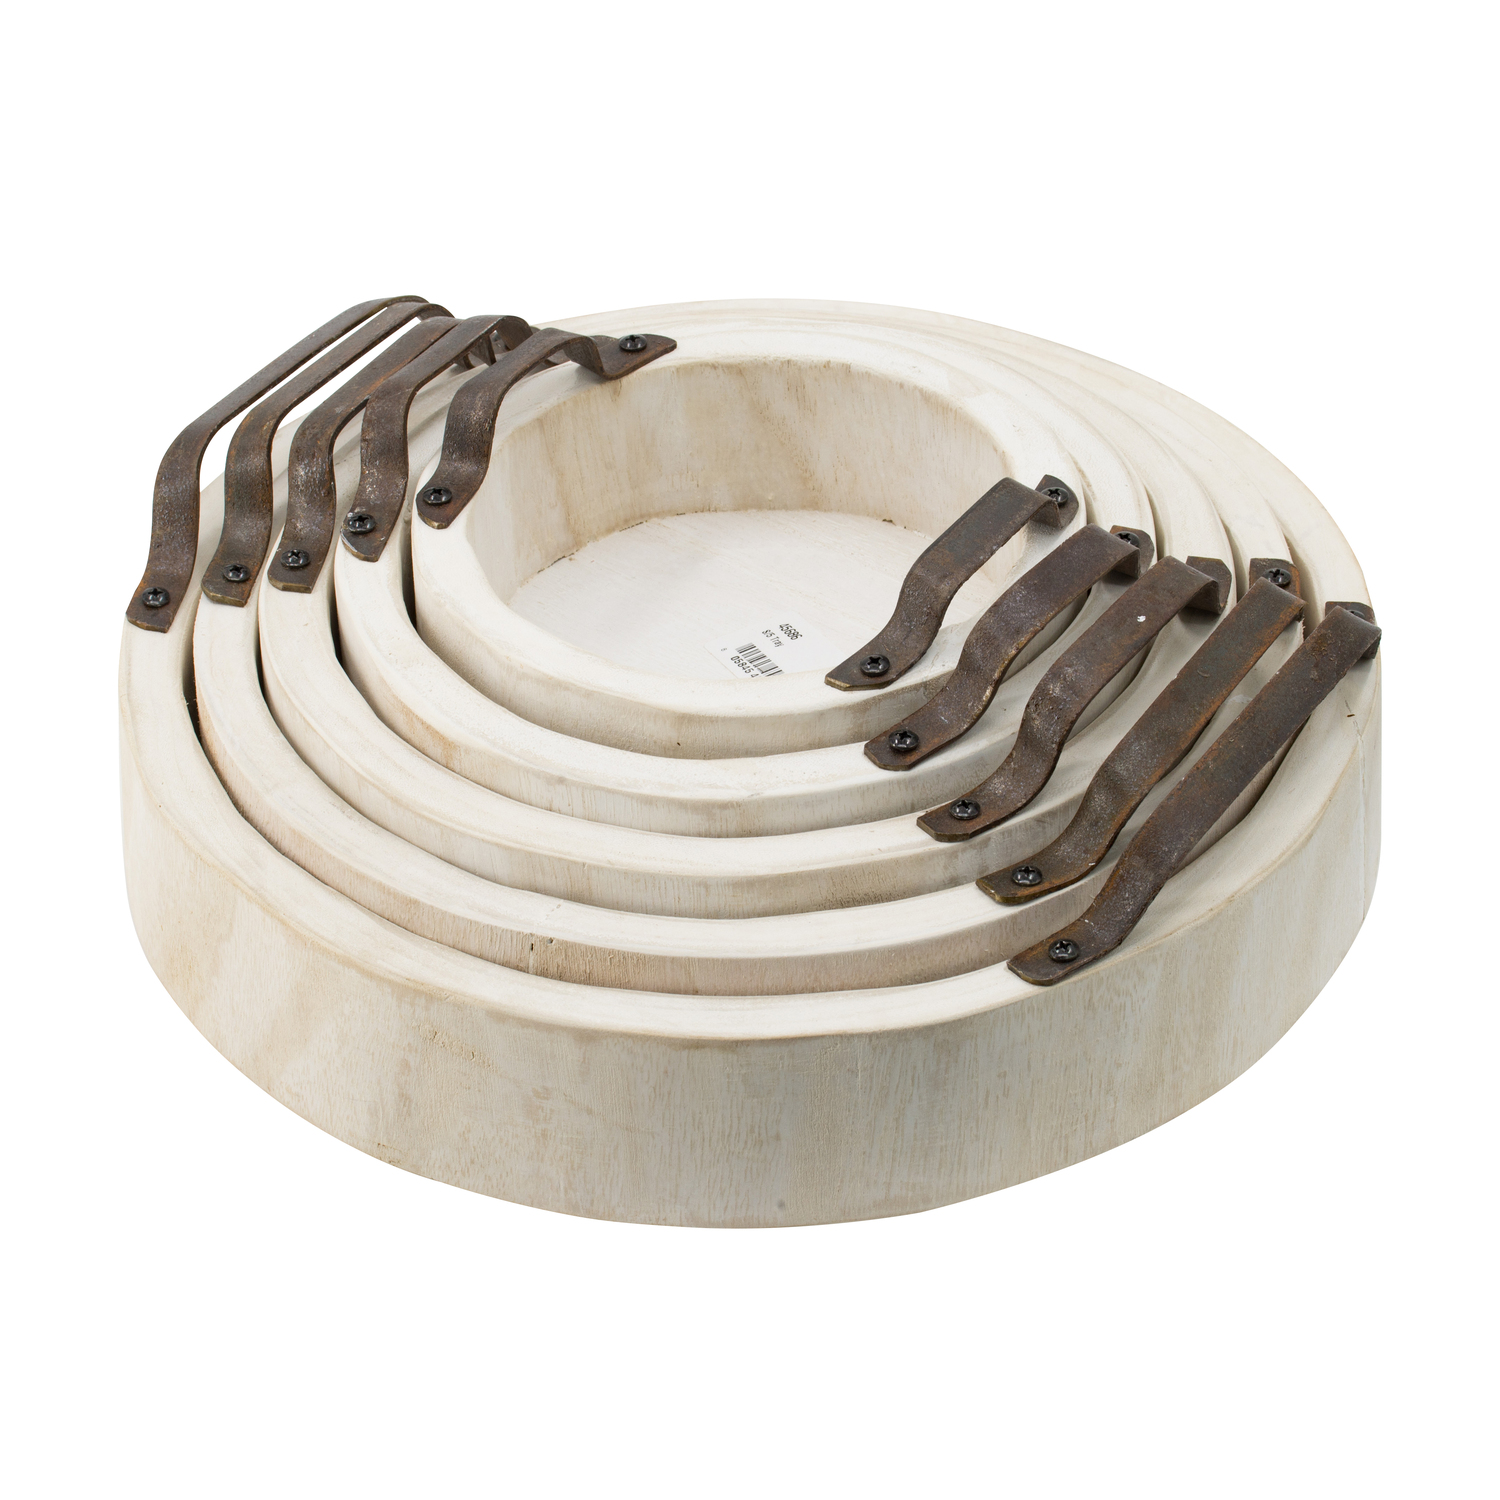 A&B Home Interlocking Round Paulownia Wood Nesting Trays with Metal Handles - Set of 5 - White Wash, Brown Finish - image 1 of 5